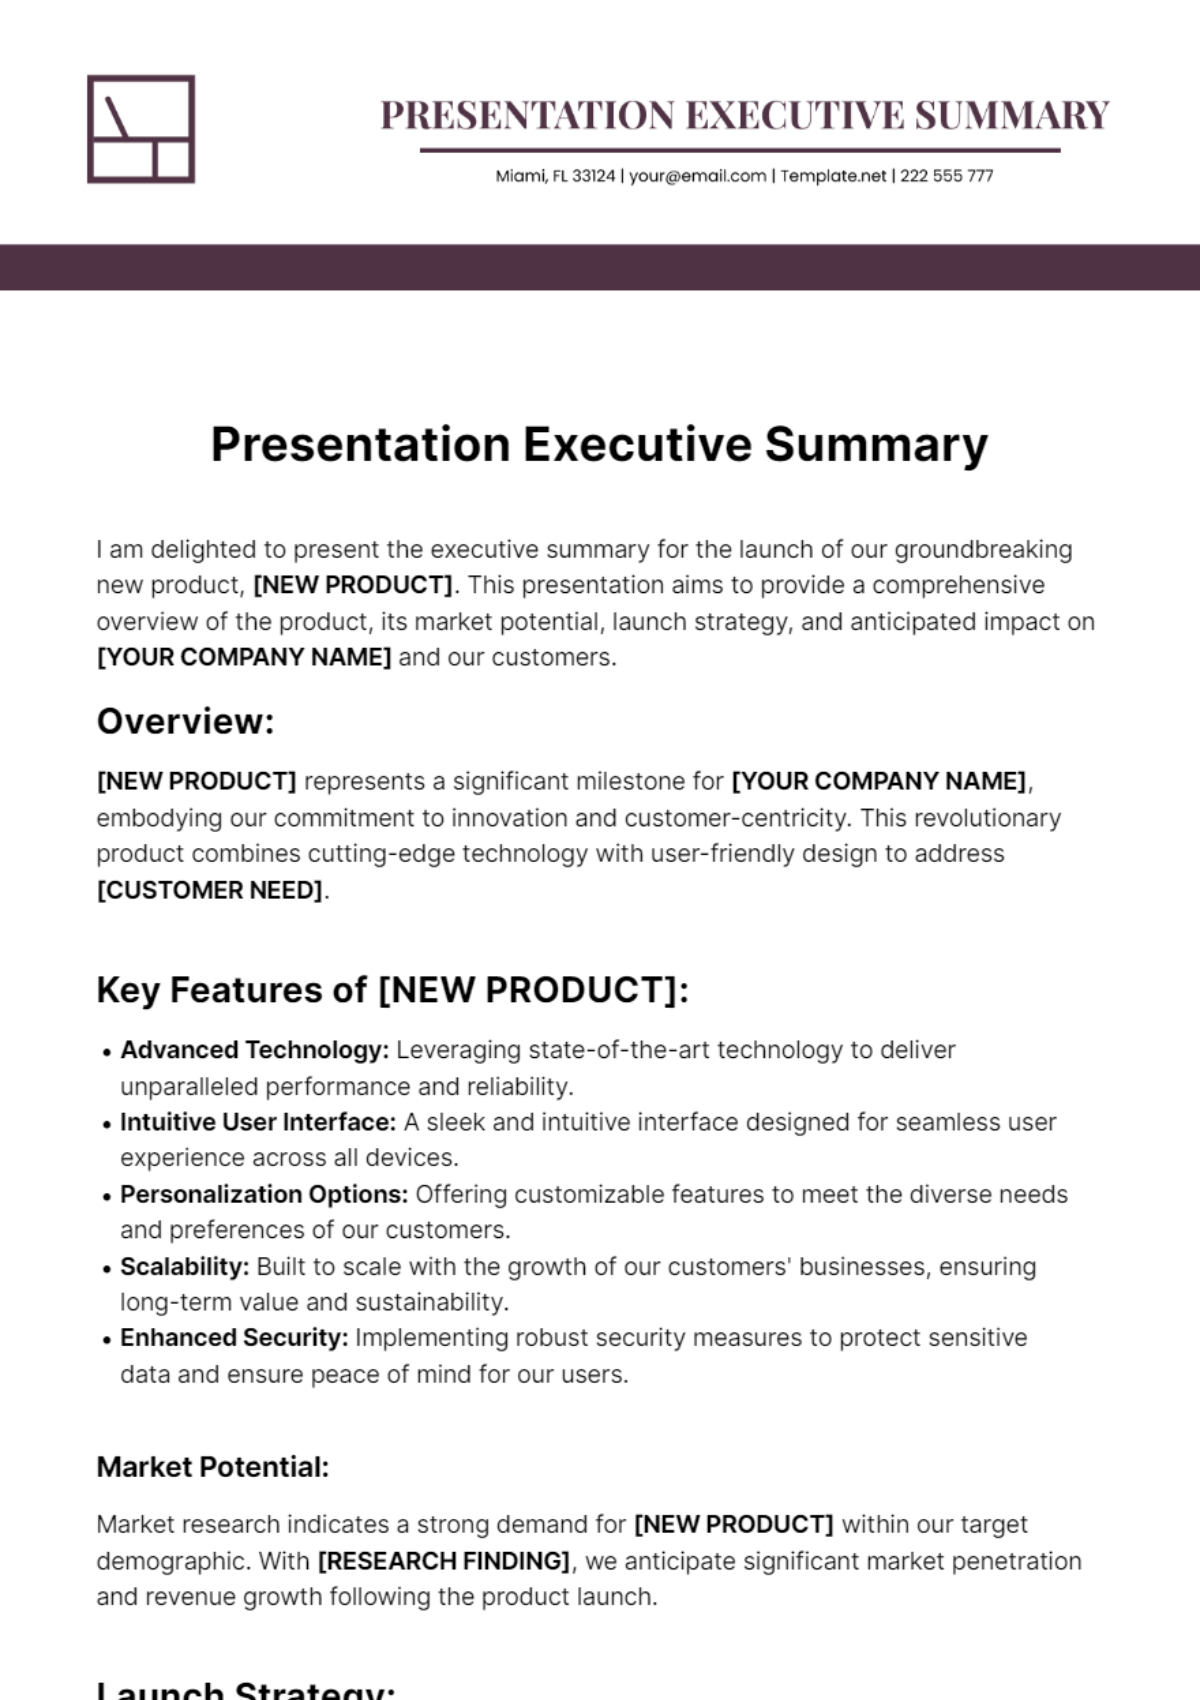 Presentation Executive Summary Template